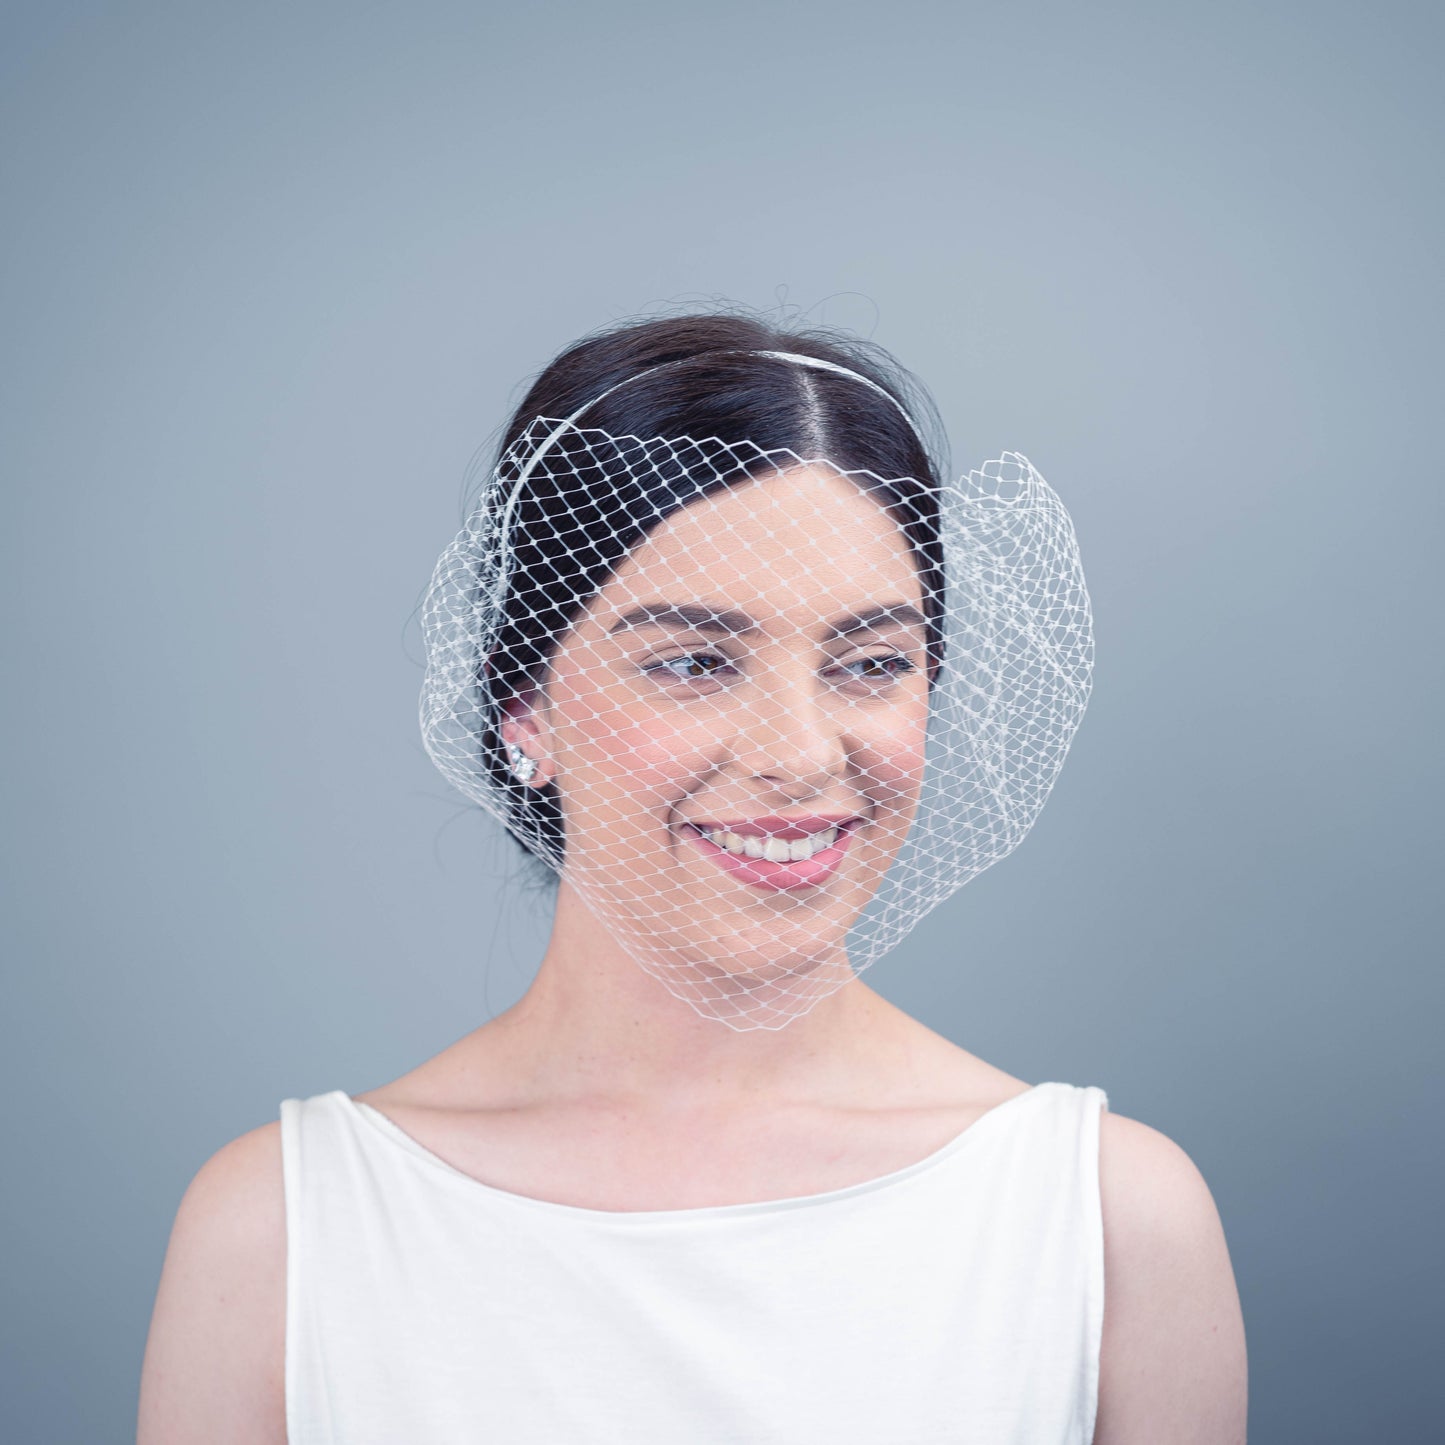 Valerie face veil headpiece in white